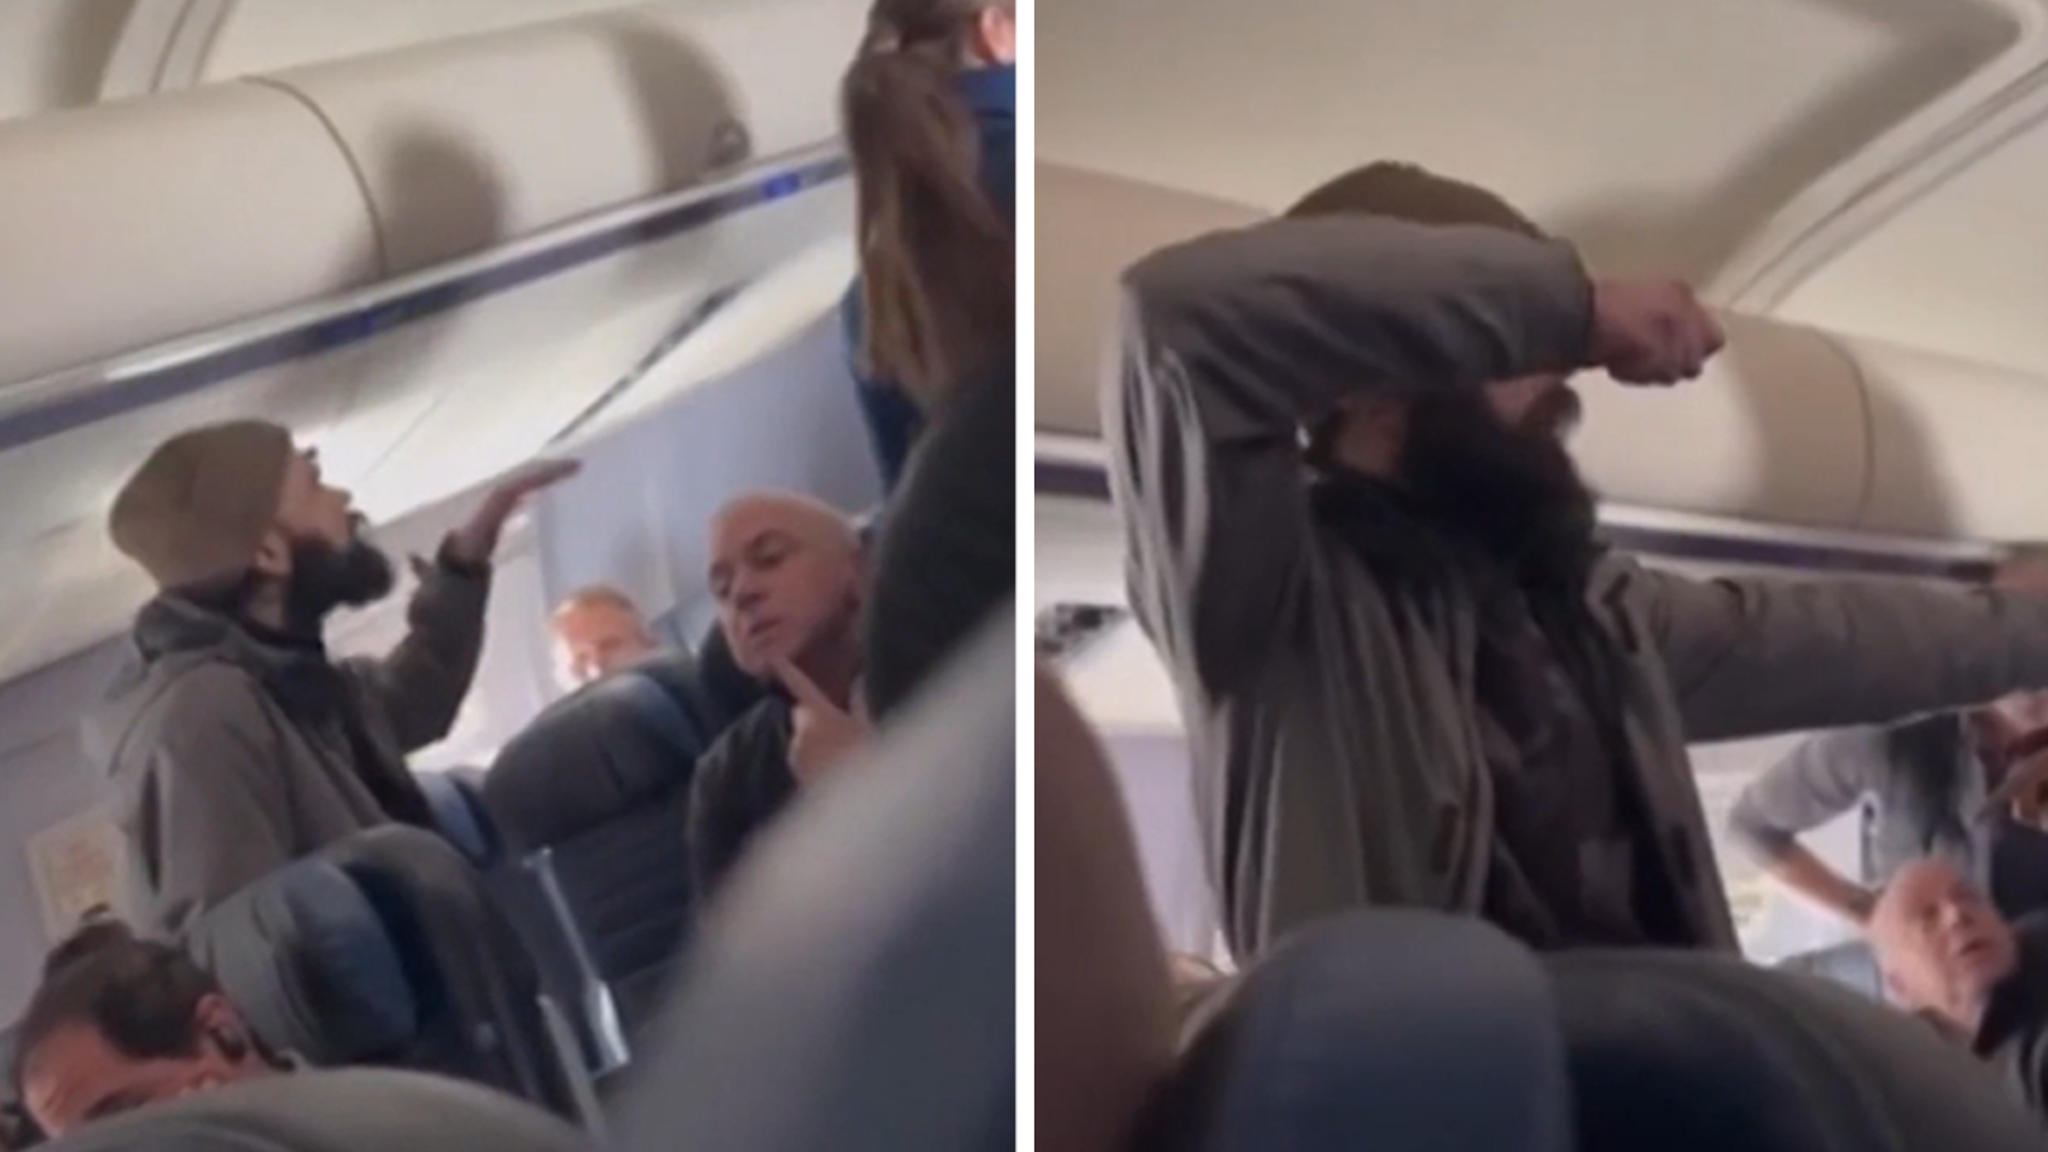 New Video Shows Violent Mid-Flight Attack, Passenger Arrested